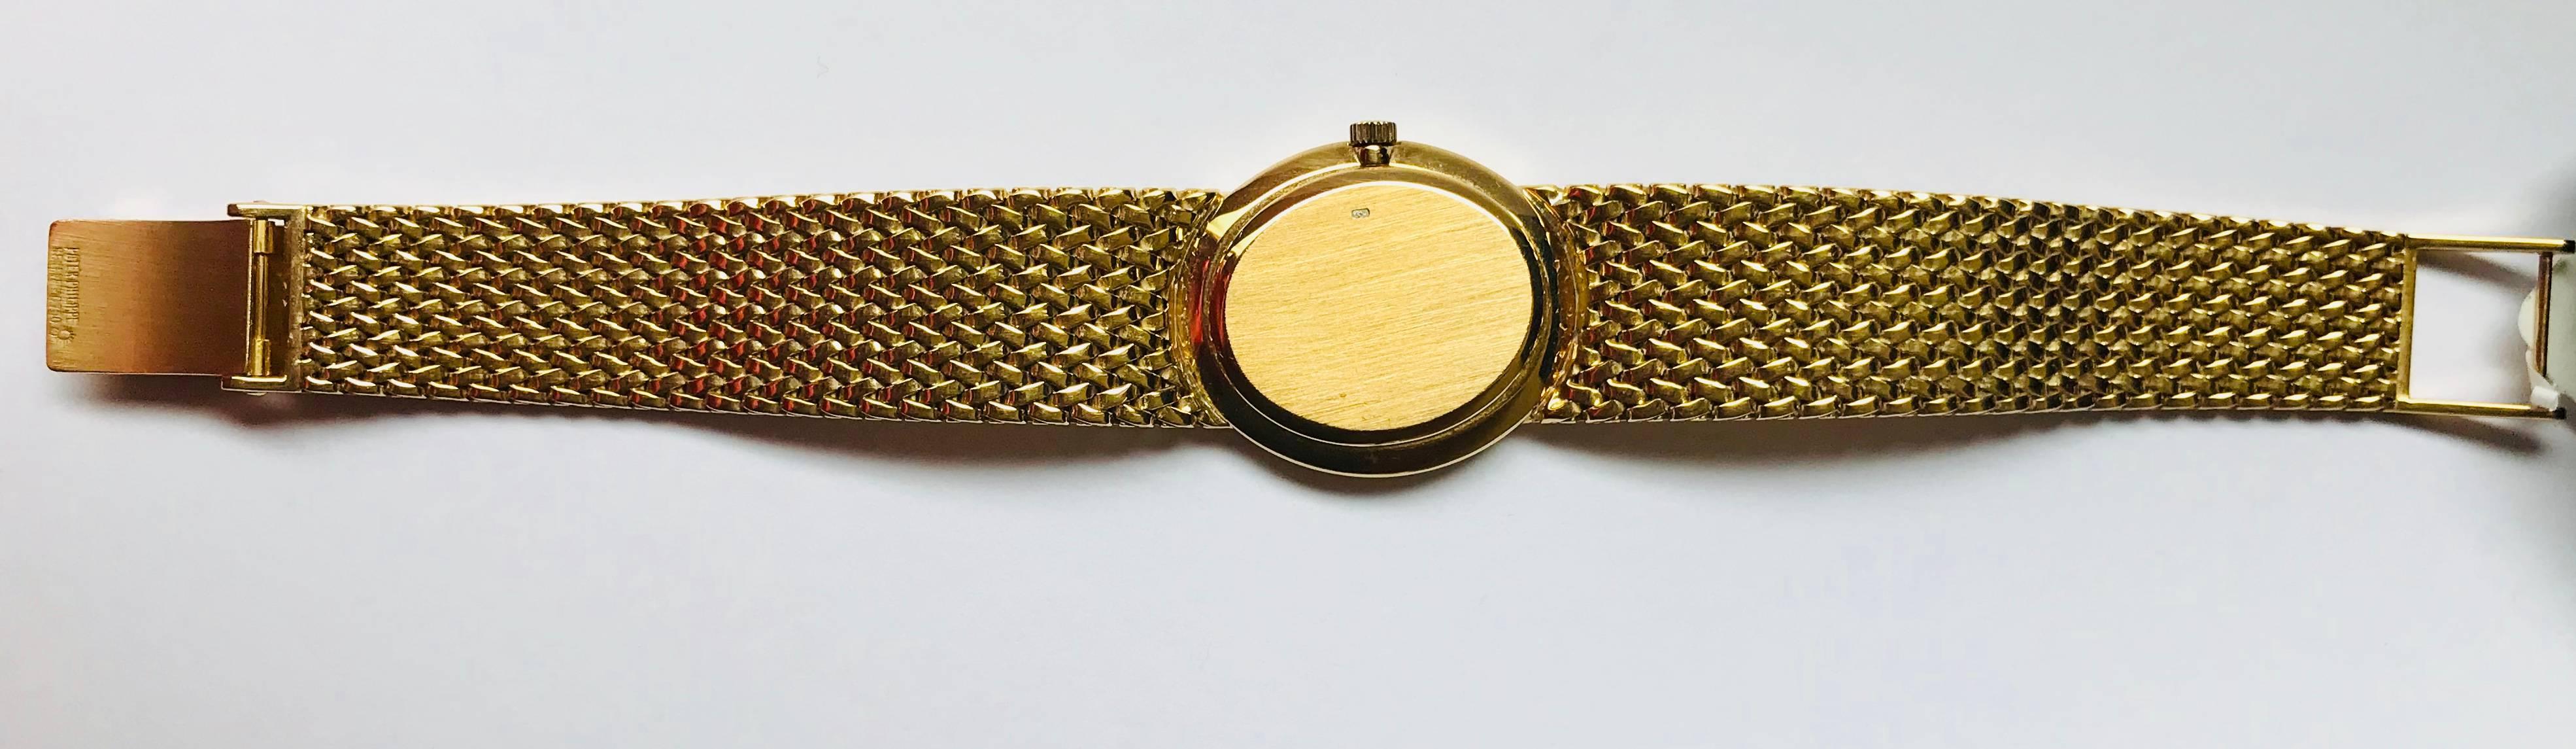 Patek Philippe Ladies Yellow Gold Ellipse Manual wind Wristwatch For Sale 6